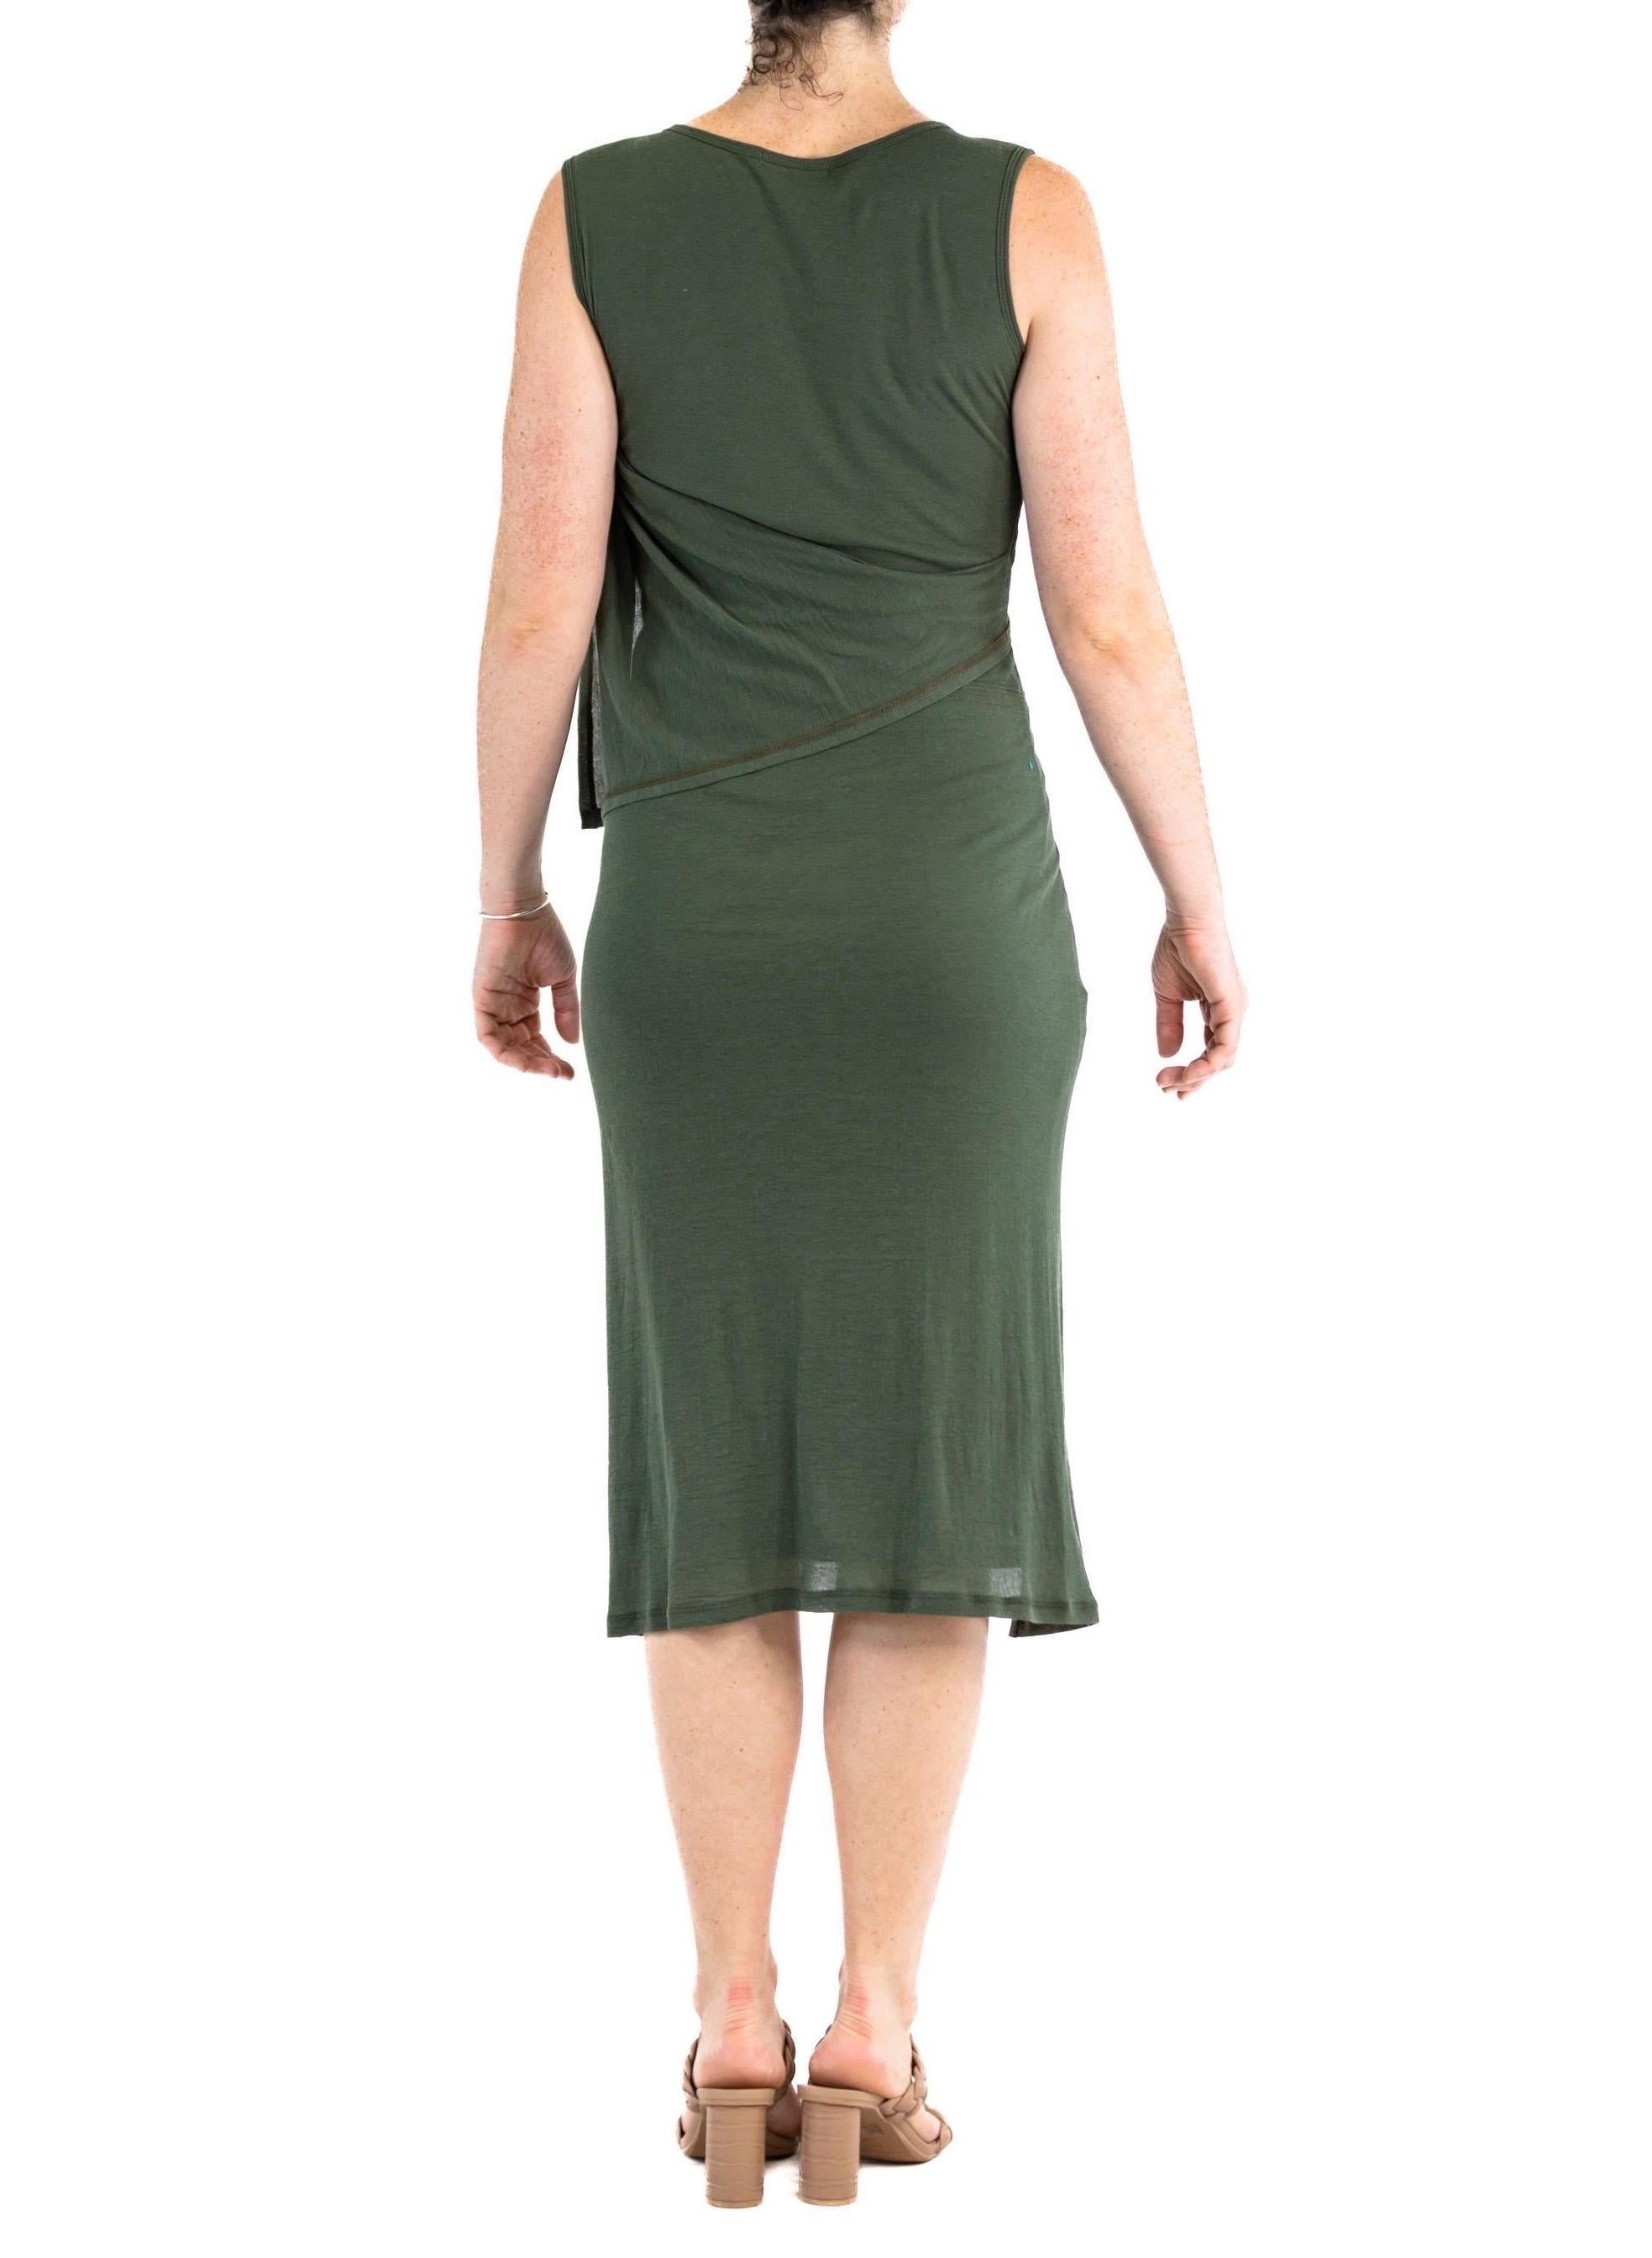 2000S ISSEY MIYAKE Olive Green Rayon Knit Asymmetrically Draped Dress 4